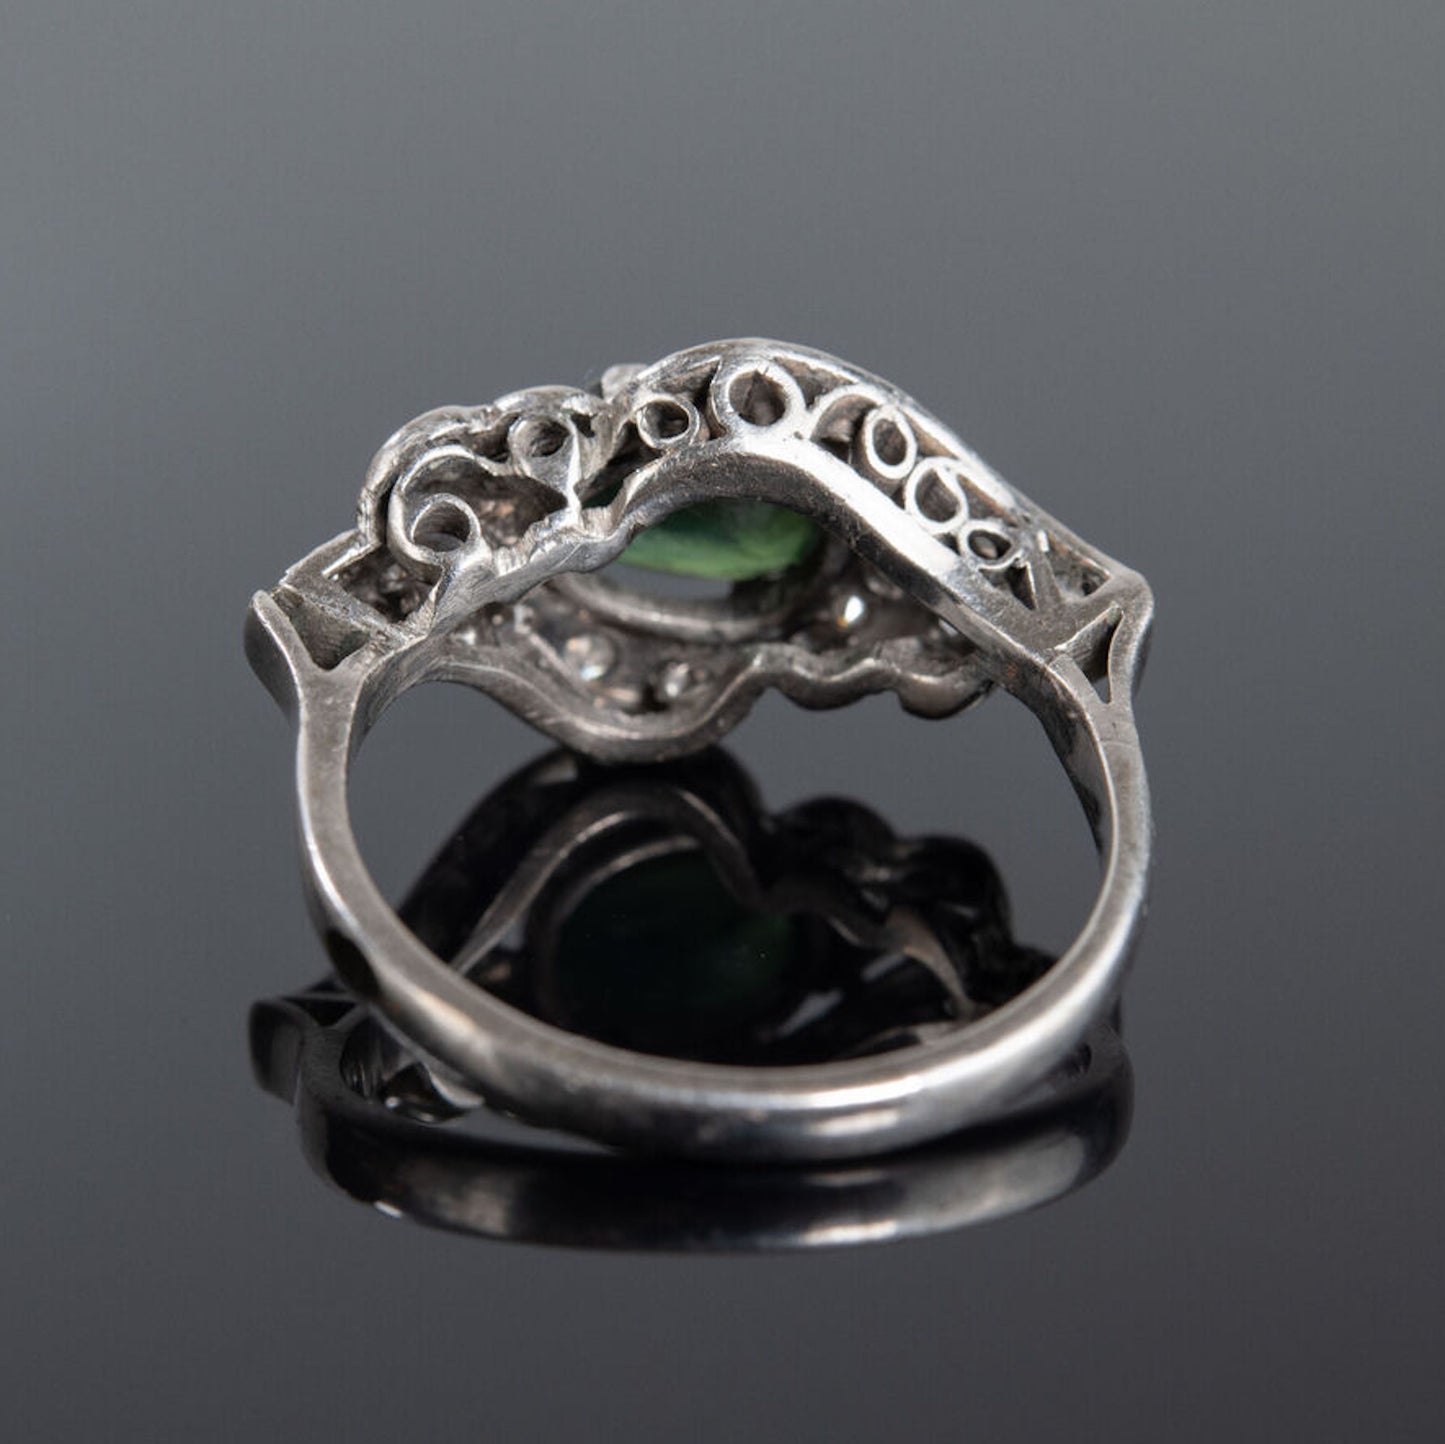 Vintage Palladium Sapphire & Diamond Ring (Appraisal Included)